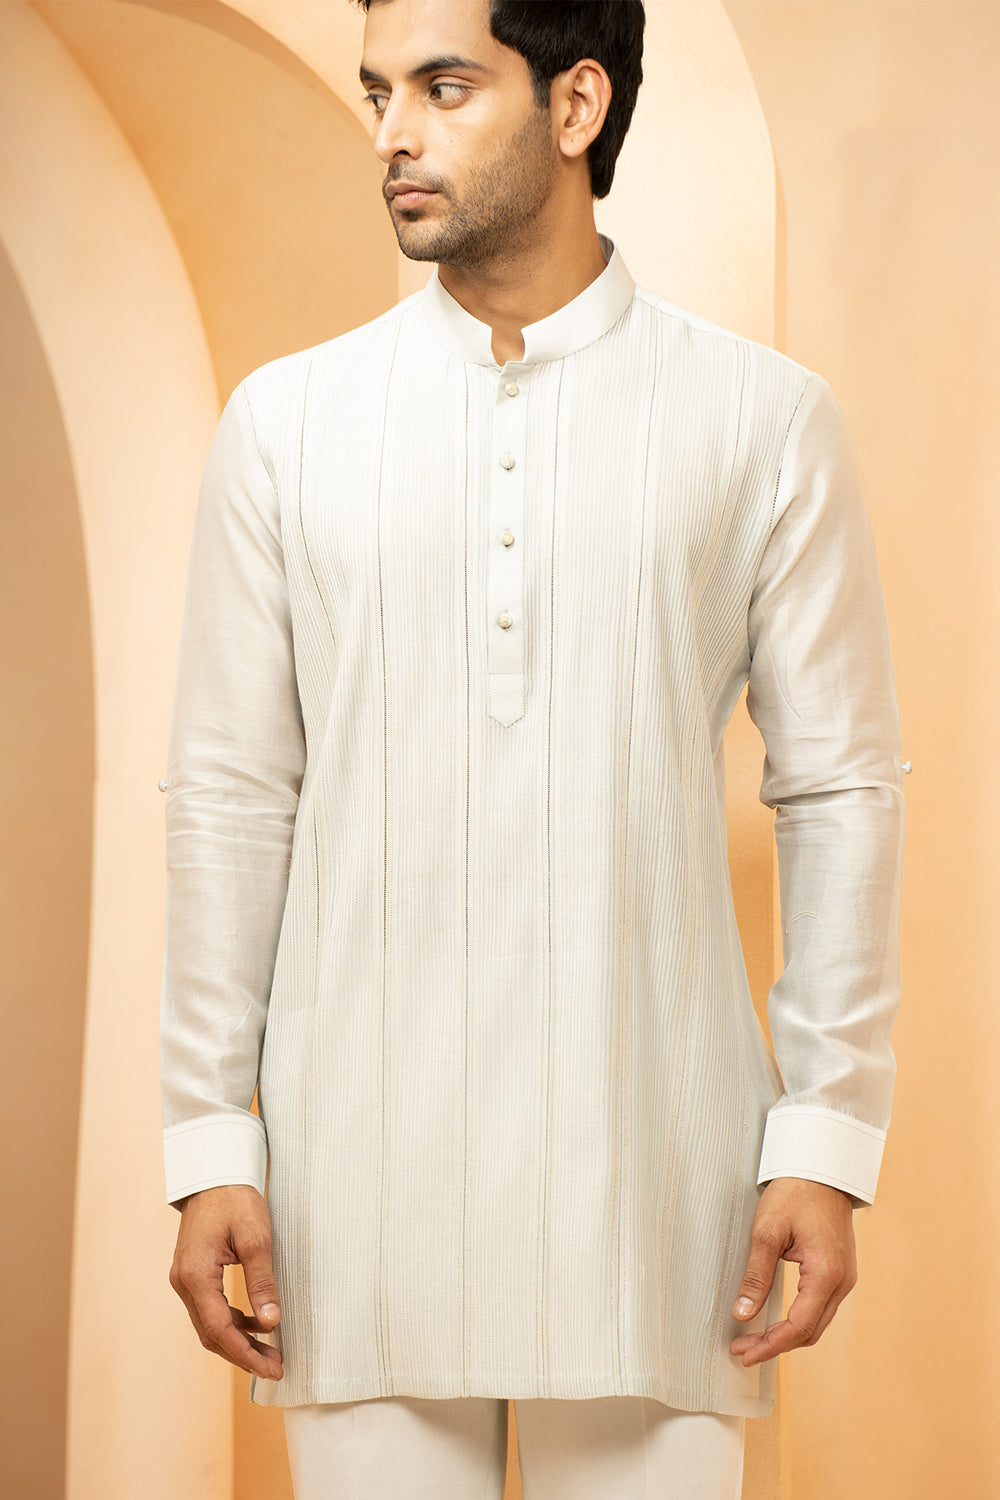 Jaquard Jacketed White & Cream Kurta Pyjama Set with Aligadhi Pants